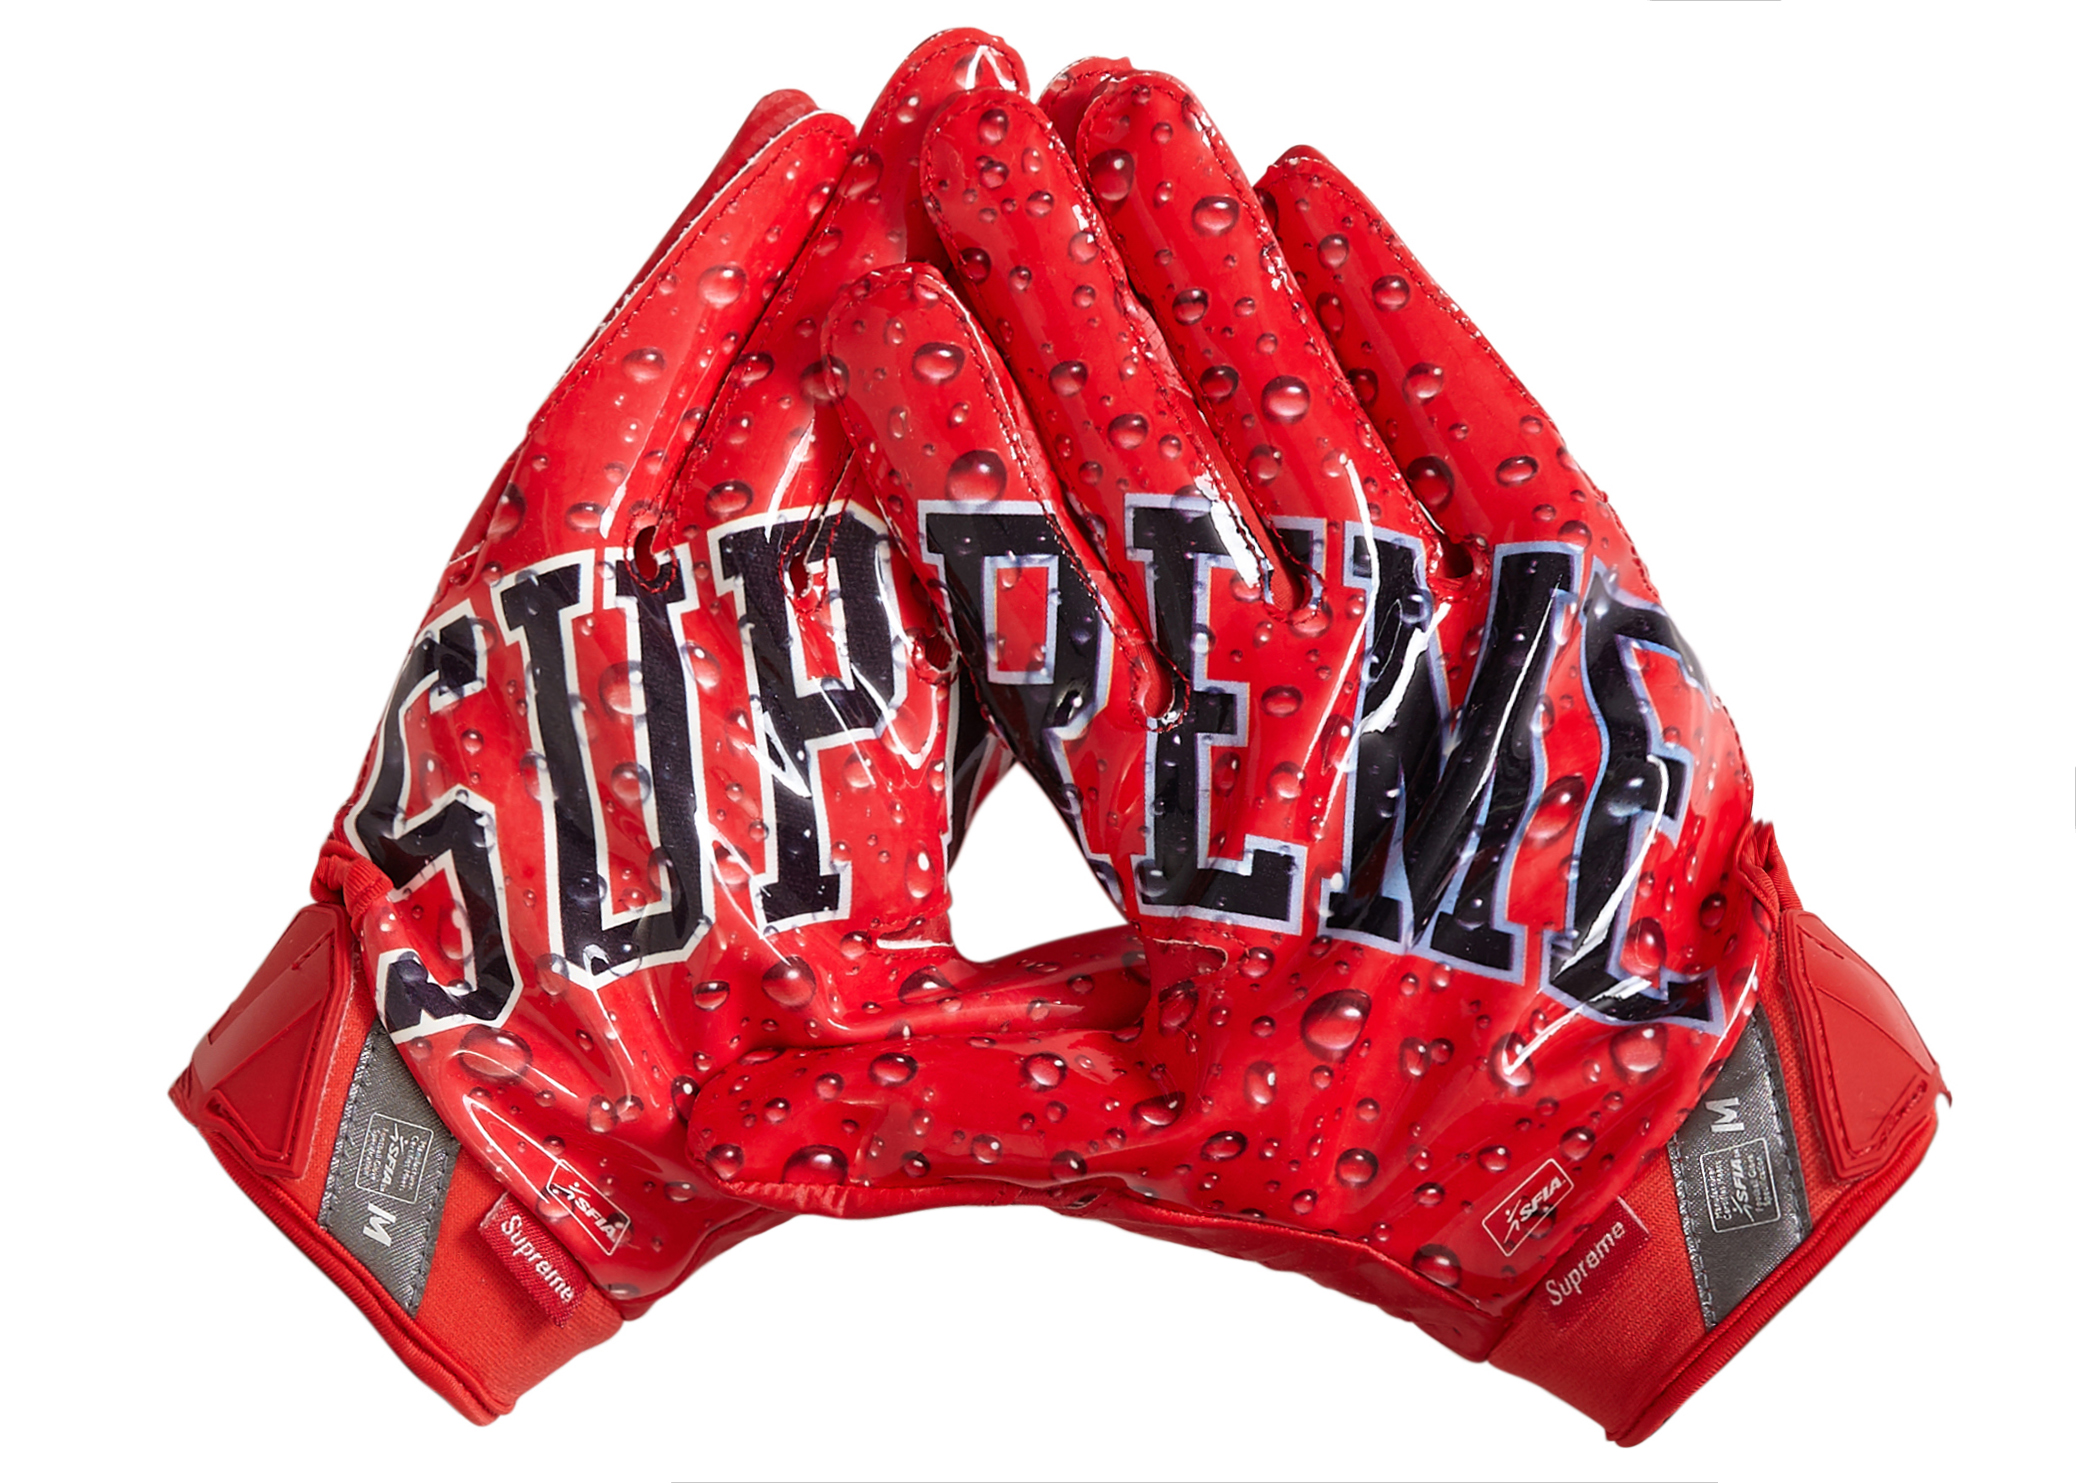 supreme football gloves black